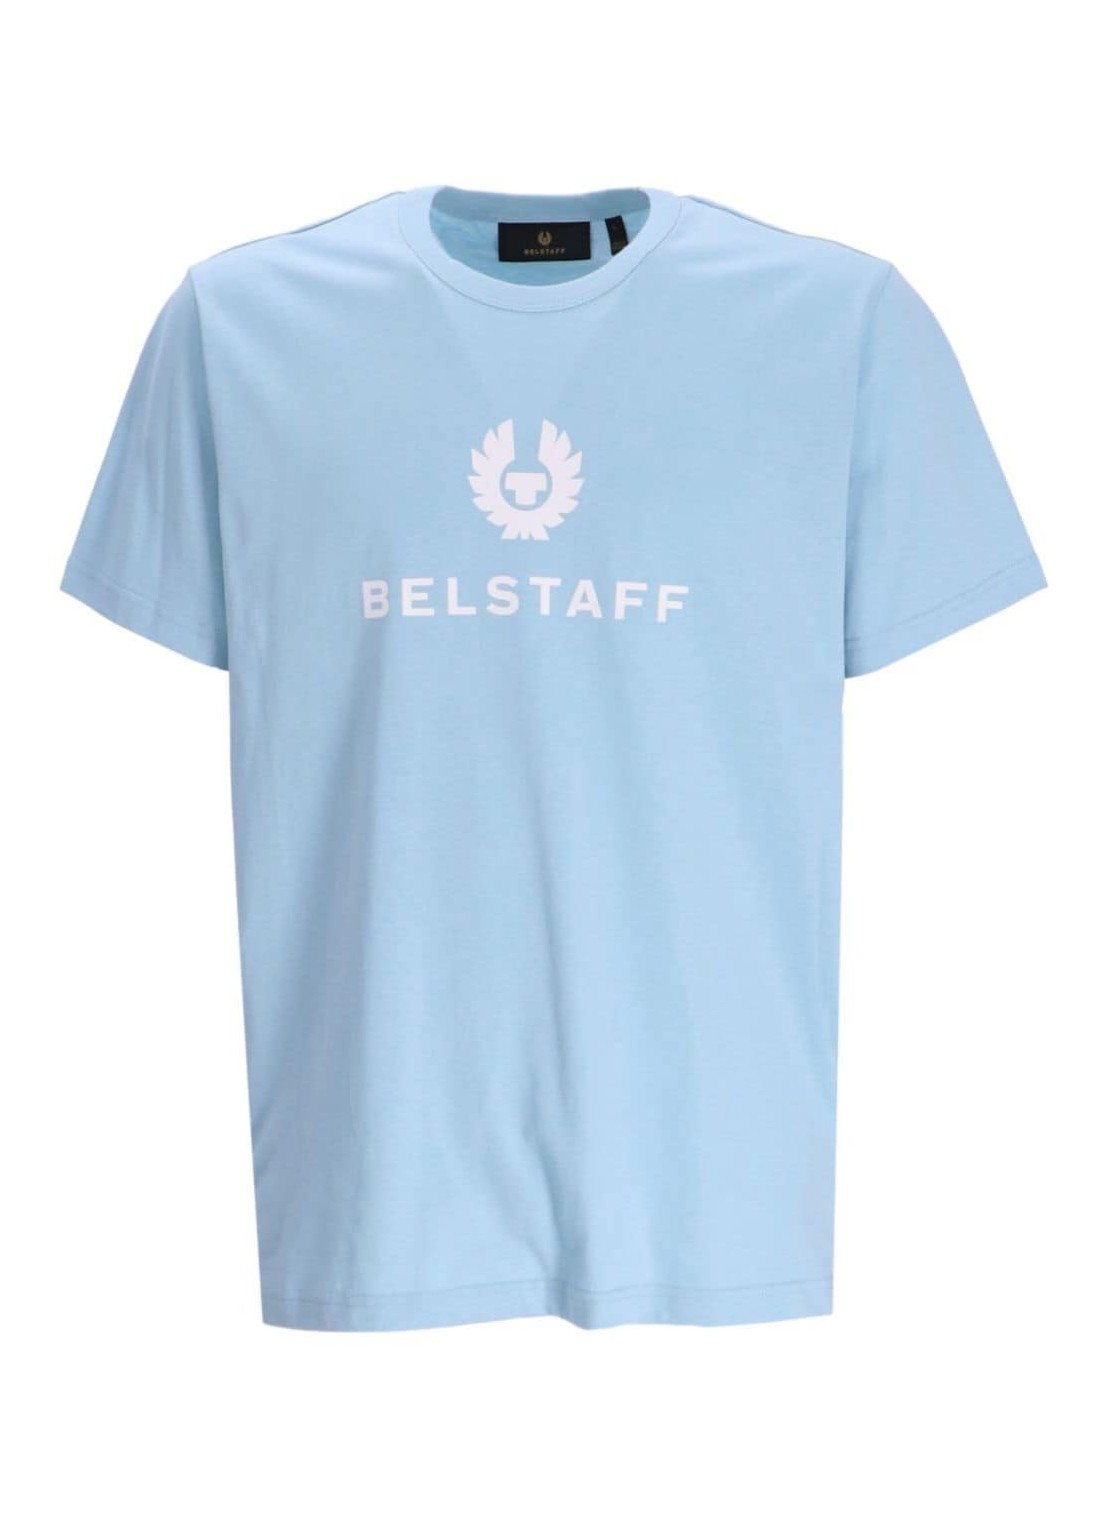 Camiseta belstaff t-shirt man belstaff signature t-shirt 104141 sylbu talla L
 